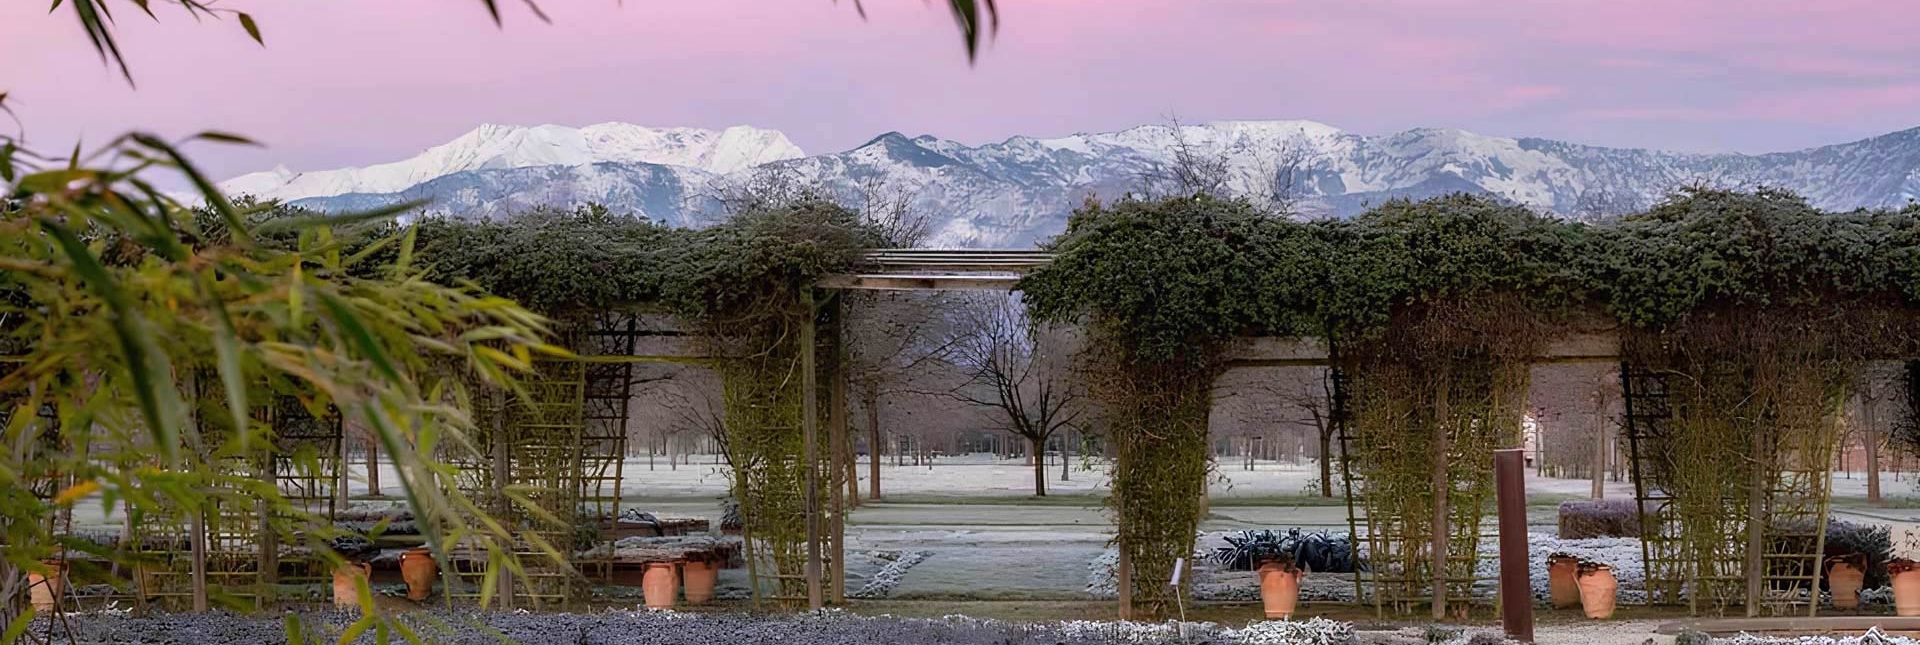 Potager Royal in inverno - Foto di Dario Fusaro